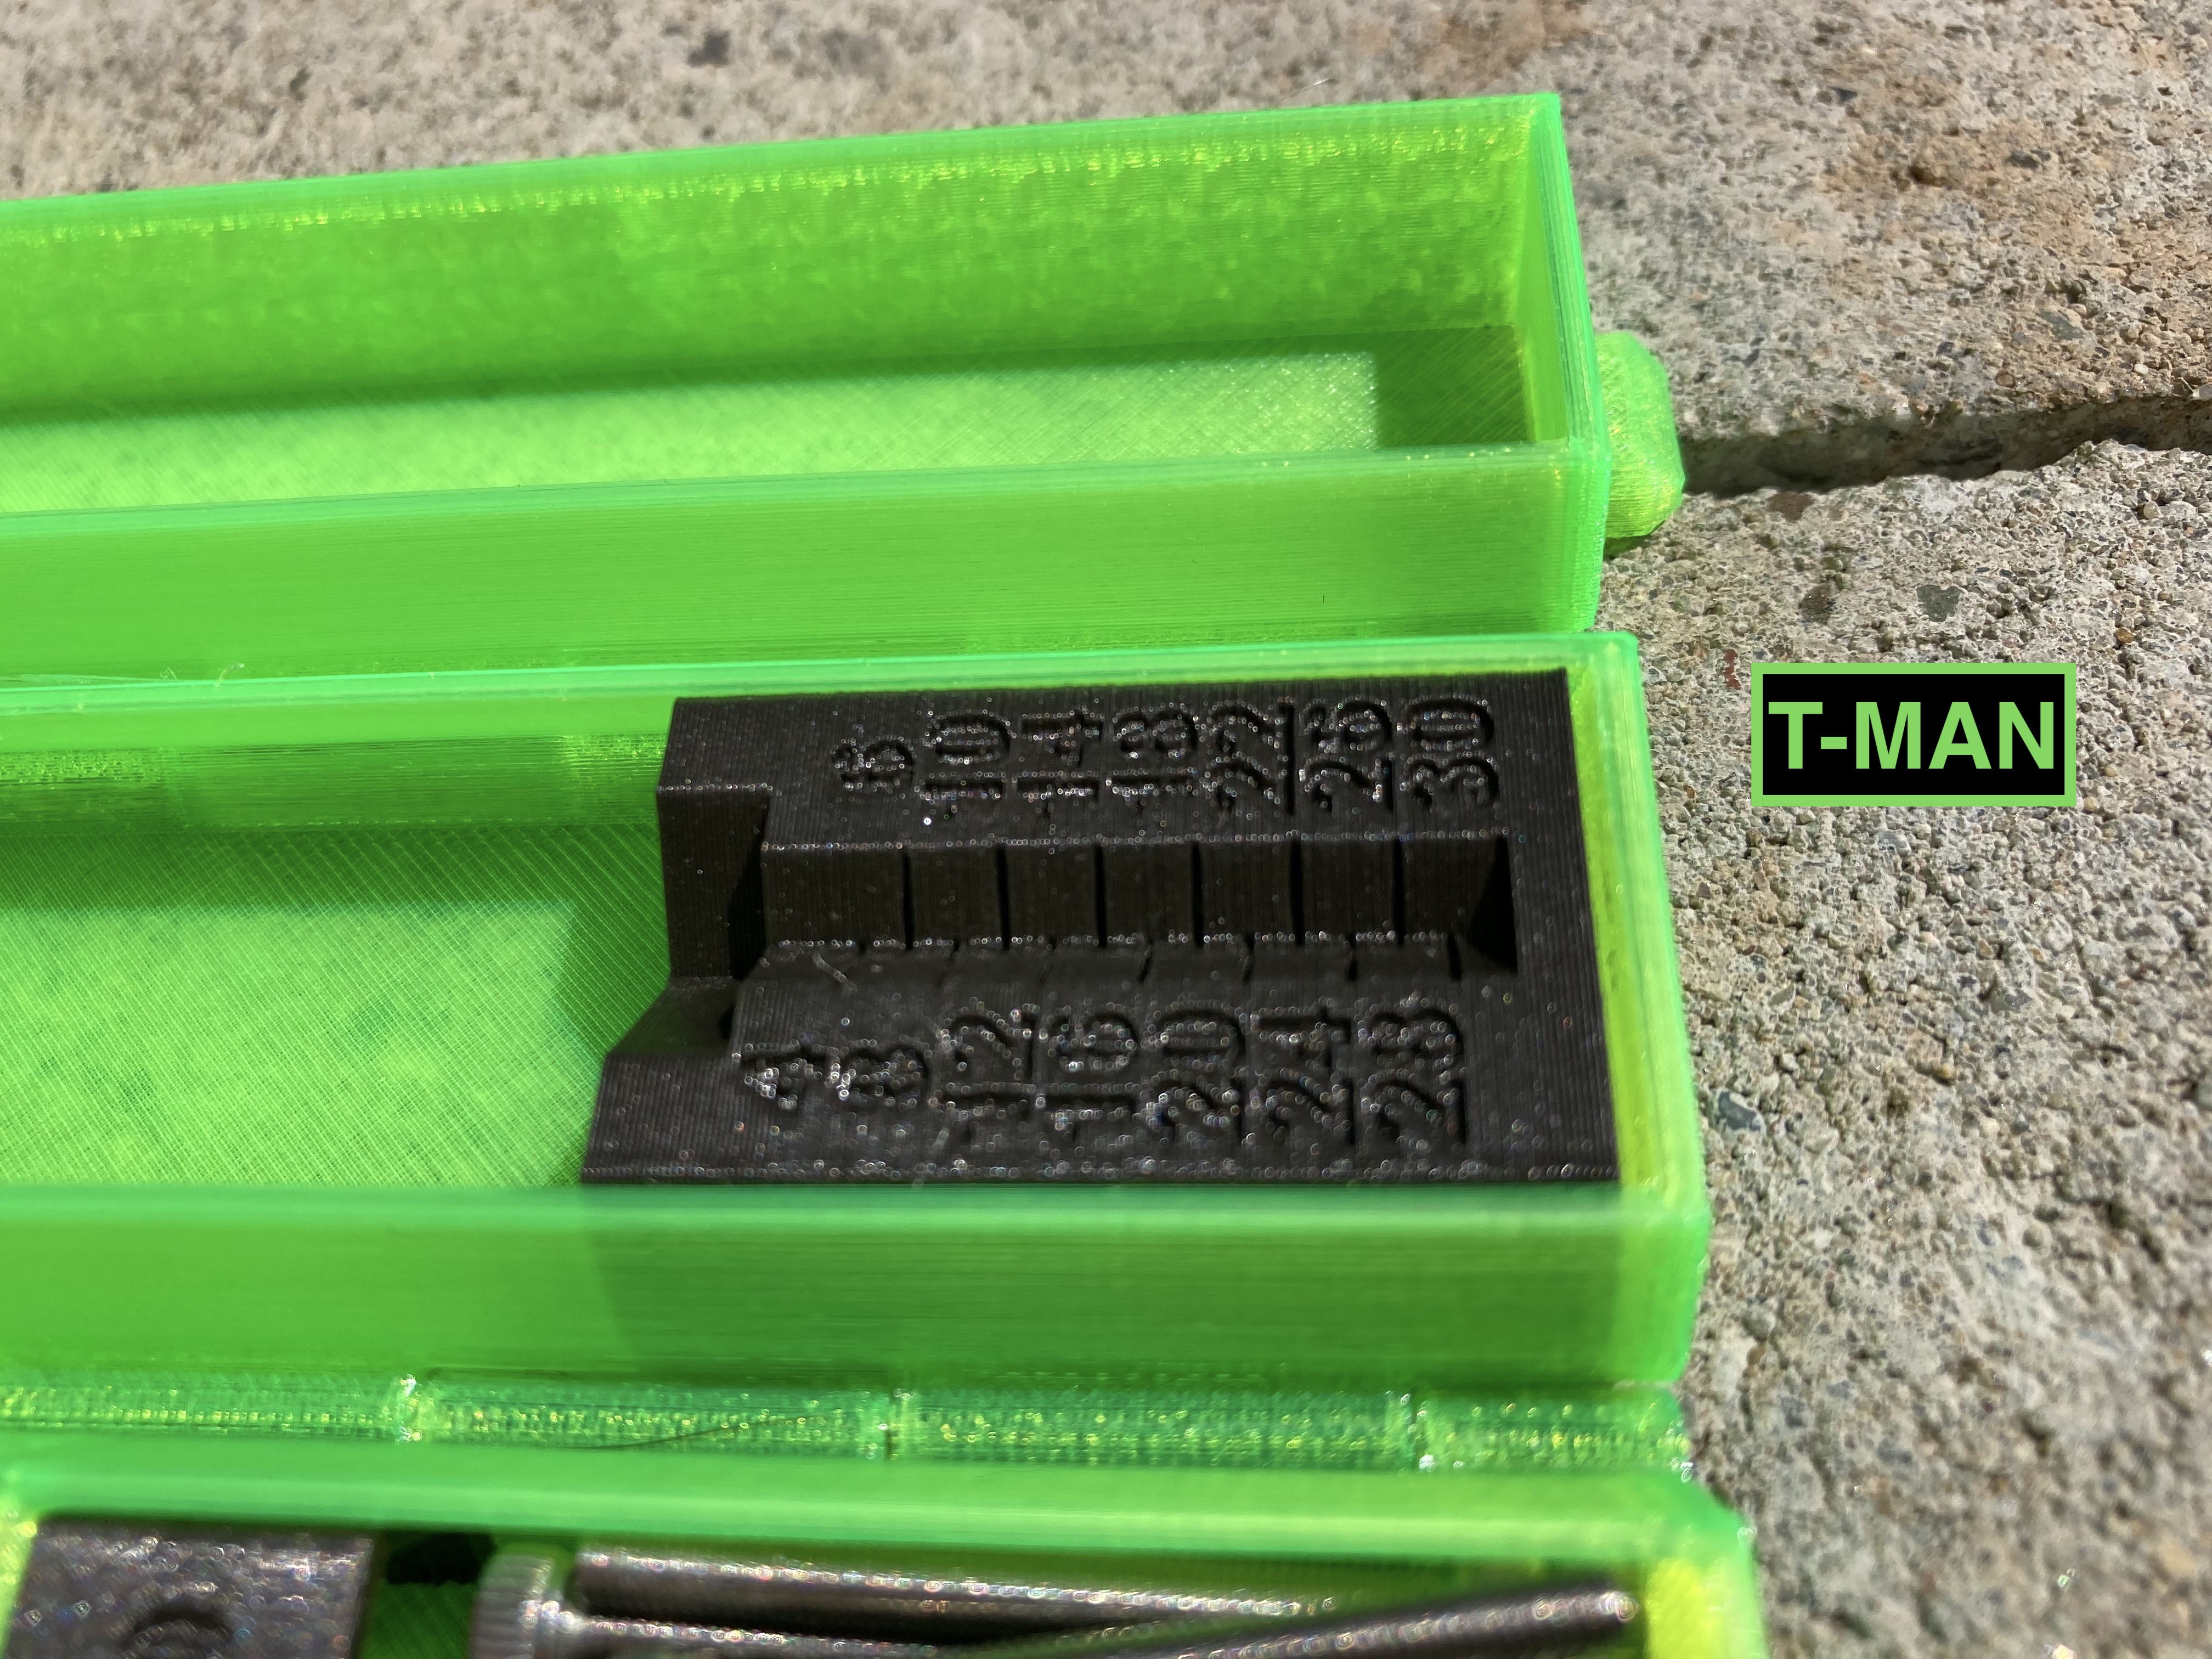 Metric Screw Measurement Tool for Rolling Storage Box!